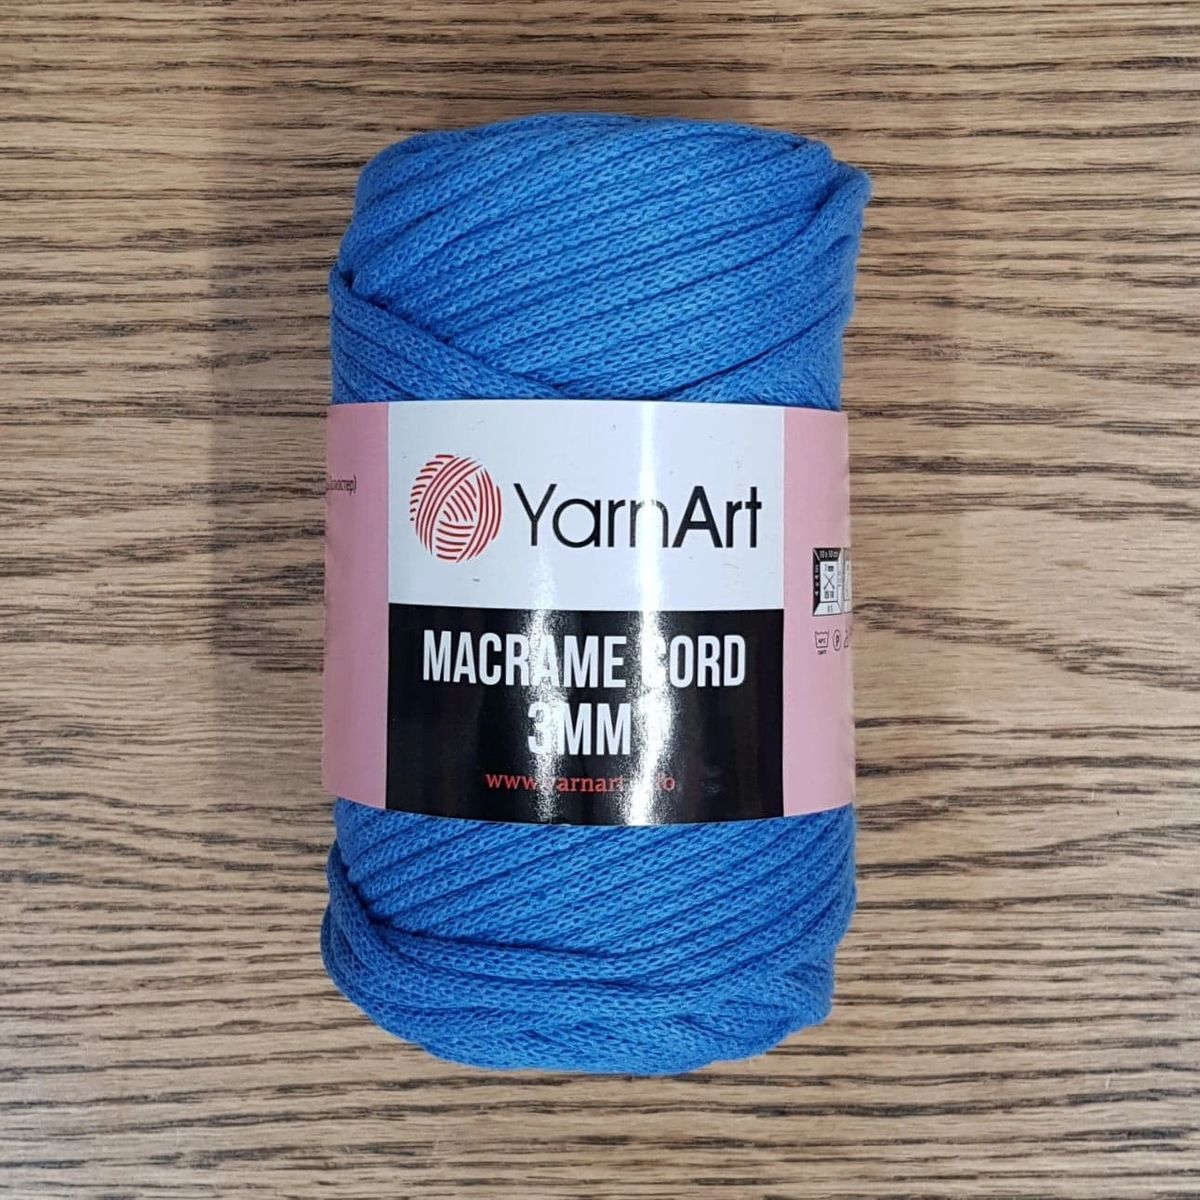 YarnArt Macrame Cord 3mm braided cotton cord 1 roll 250g colour 786